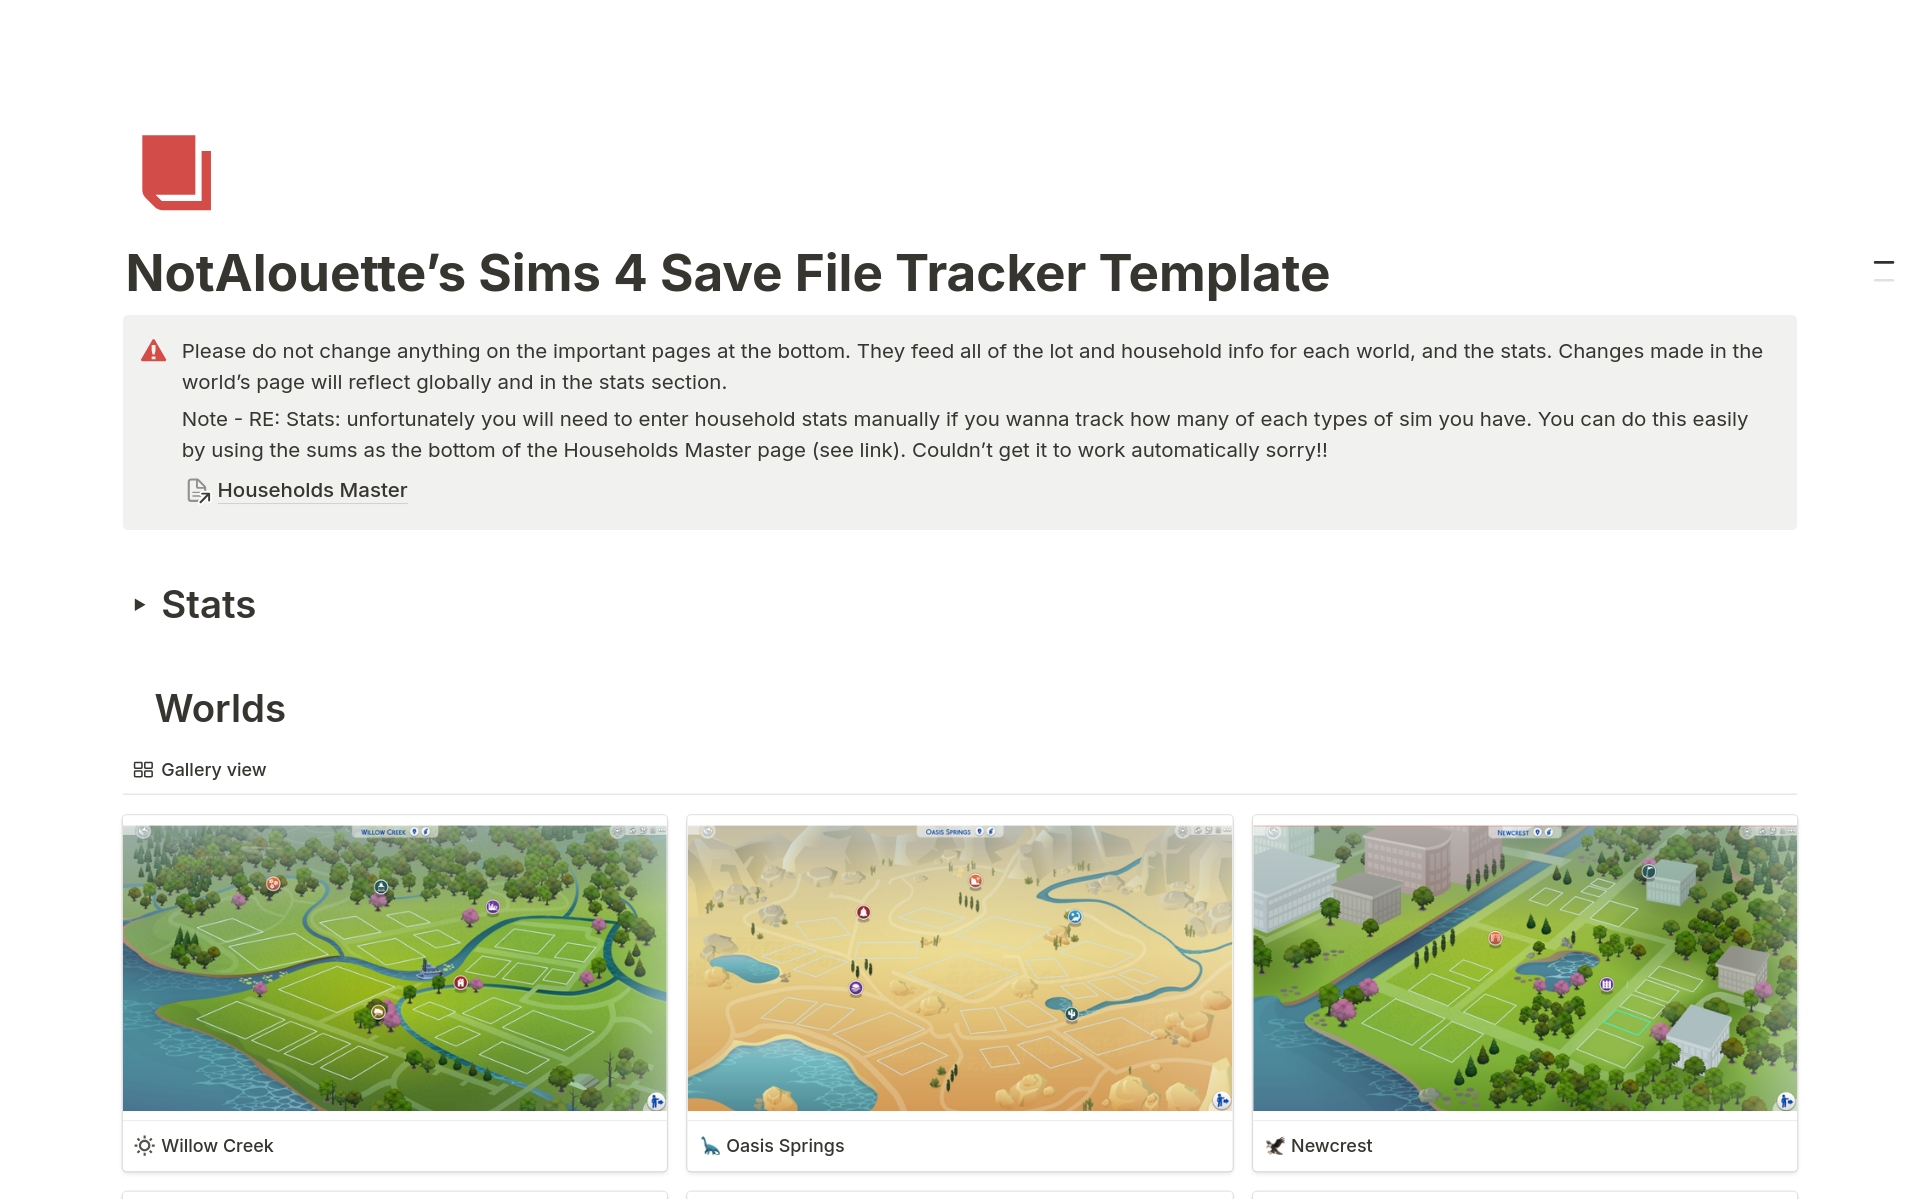 Sims 4 Save File Tracker님의 템플릿 미리보기